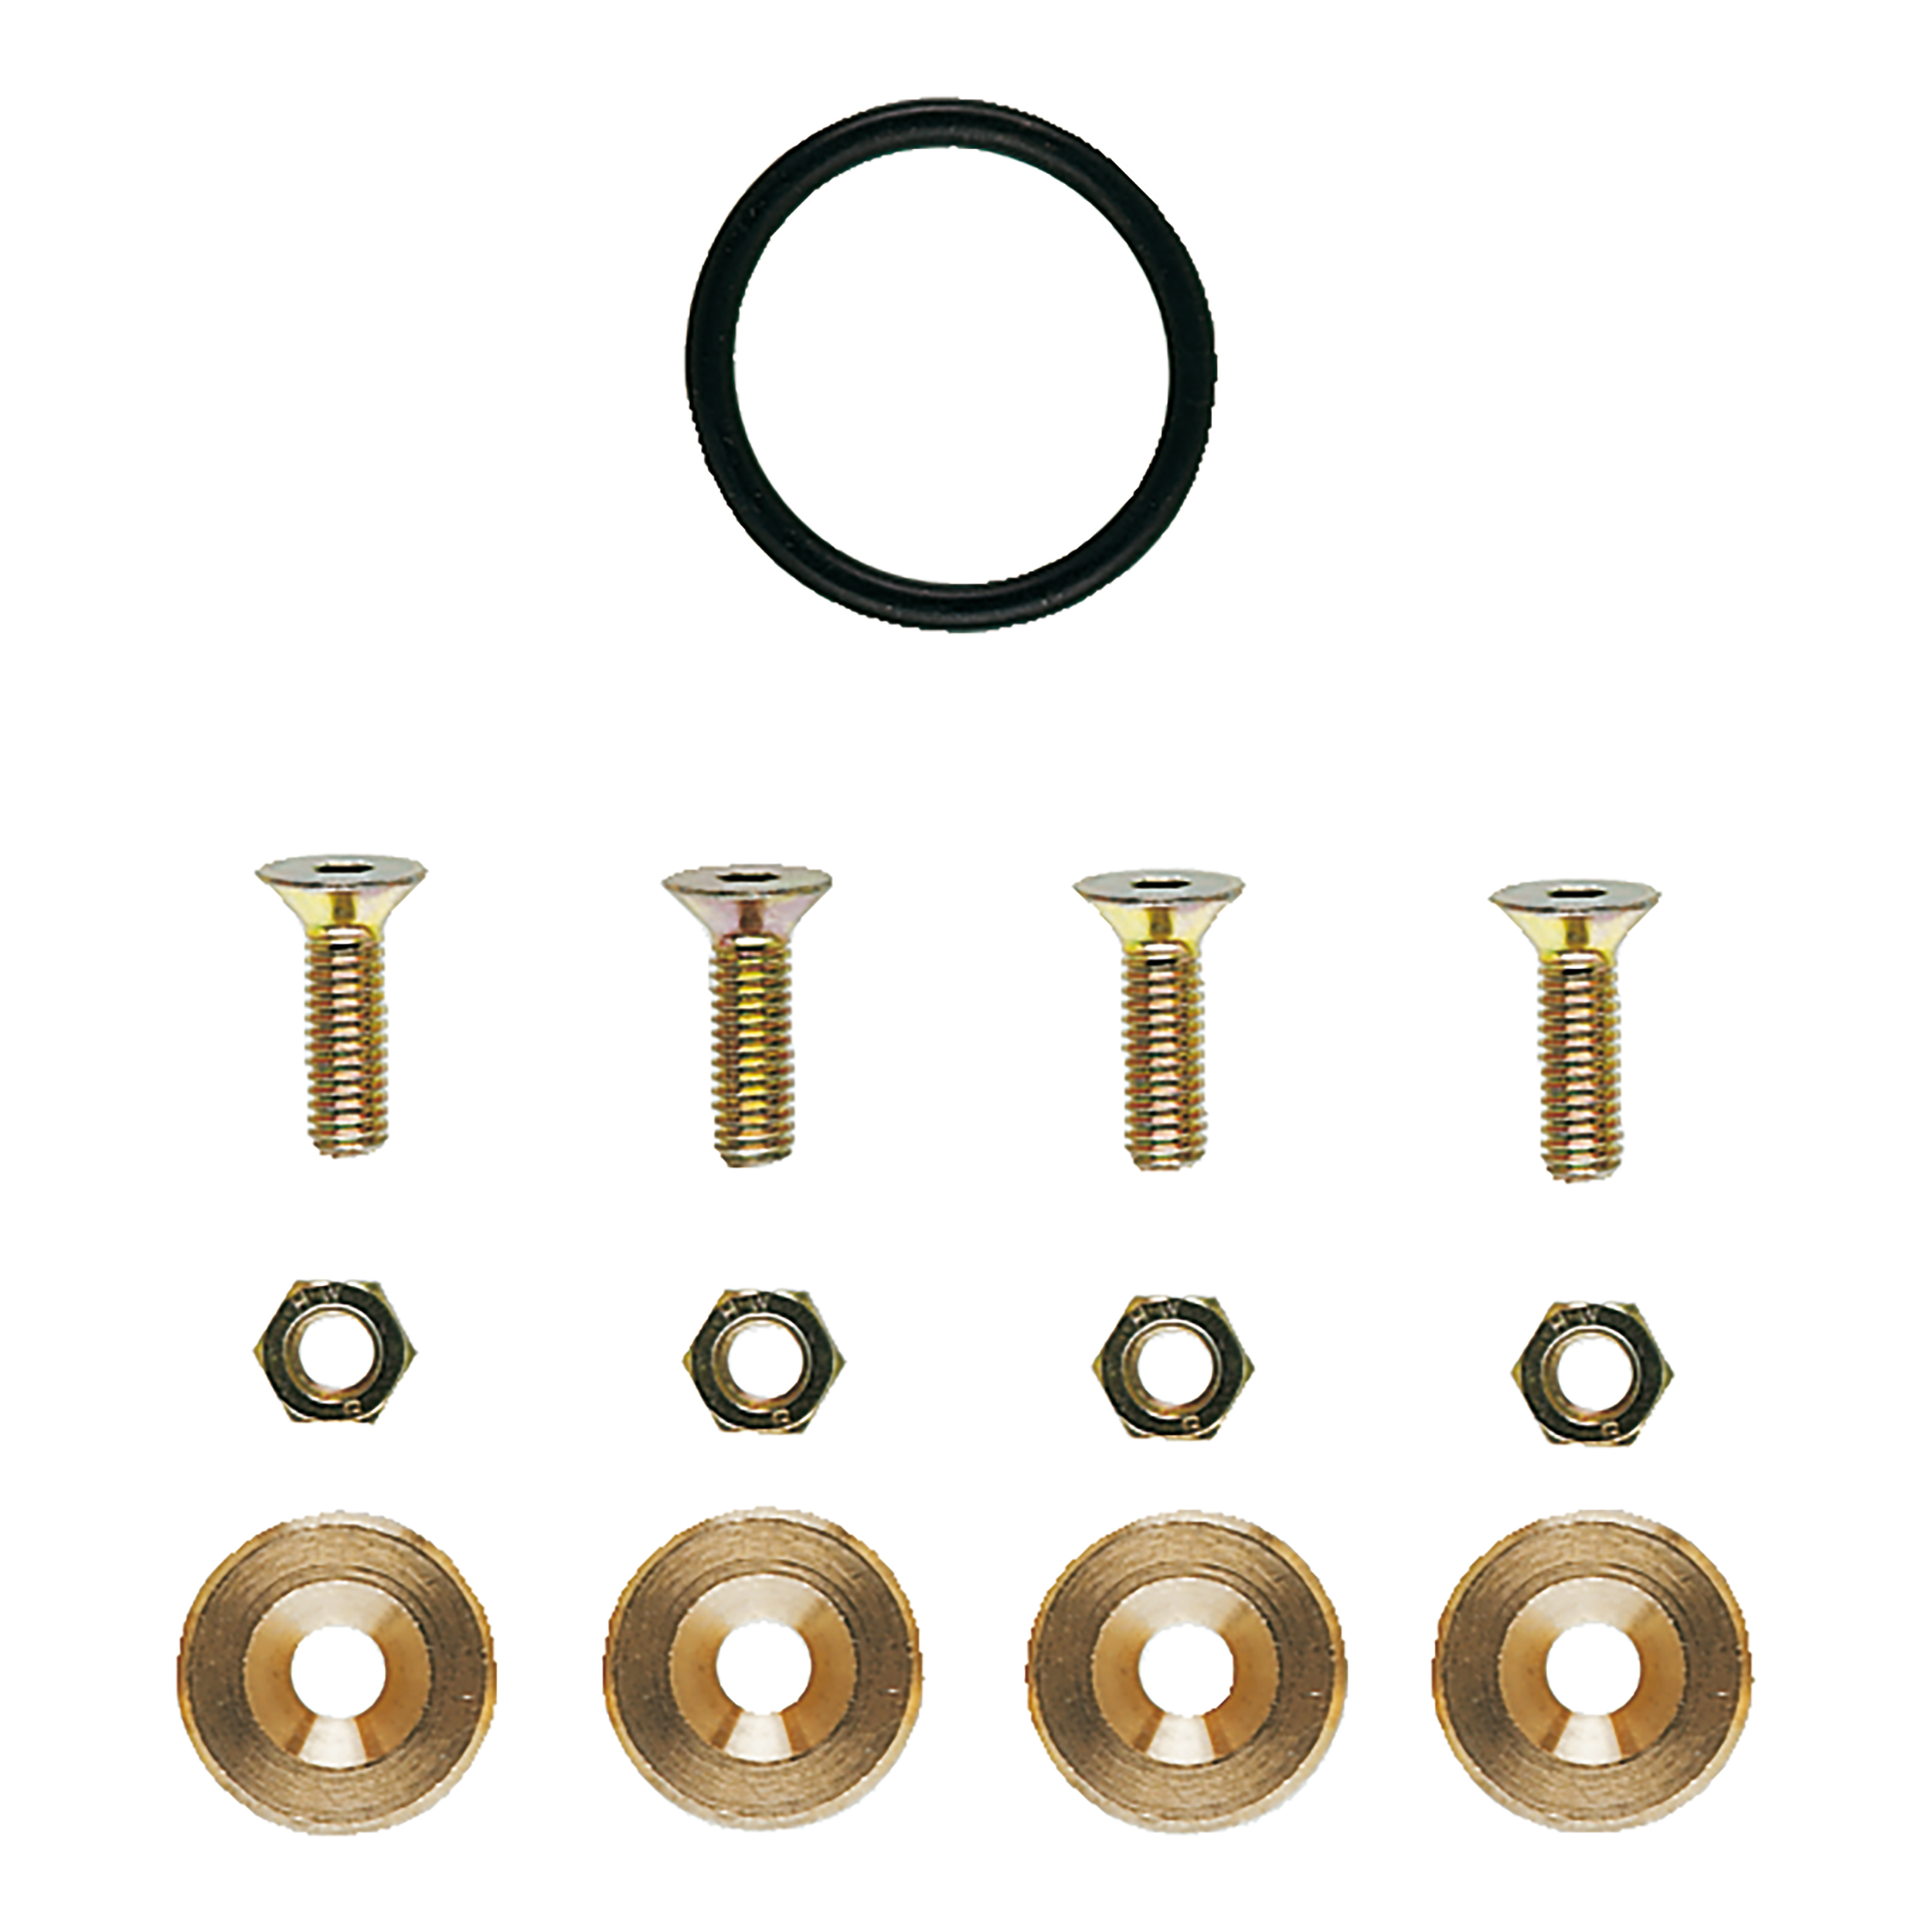 Connecting parts (kit), vma BG 90, 1 sealing ring, 4 conical sleeves, 4 screws, 4 nuts